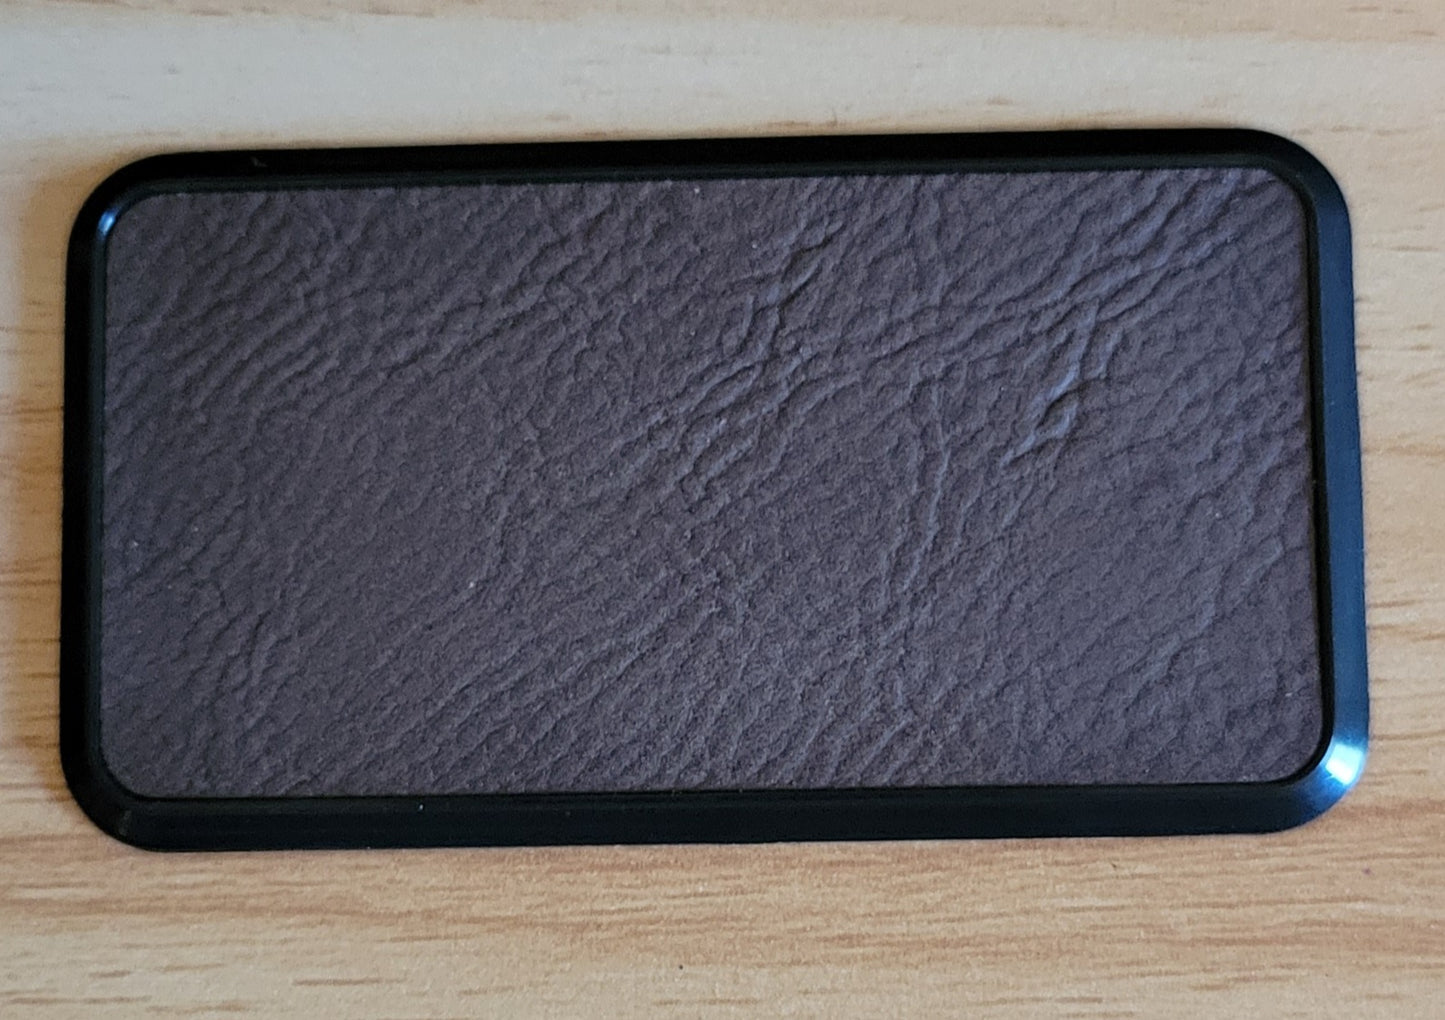 Custom engraved framed leather name tag / badge.